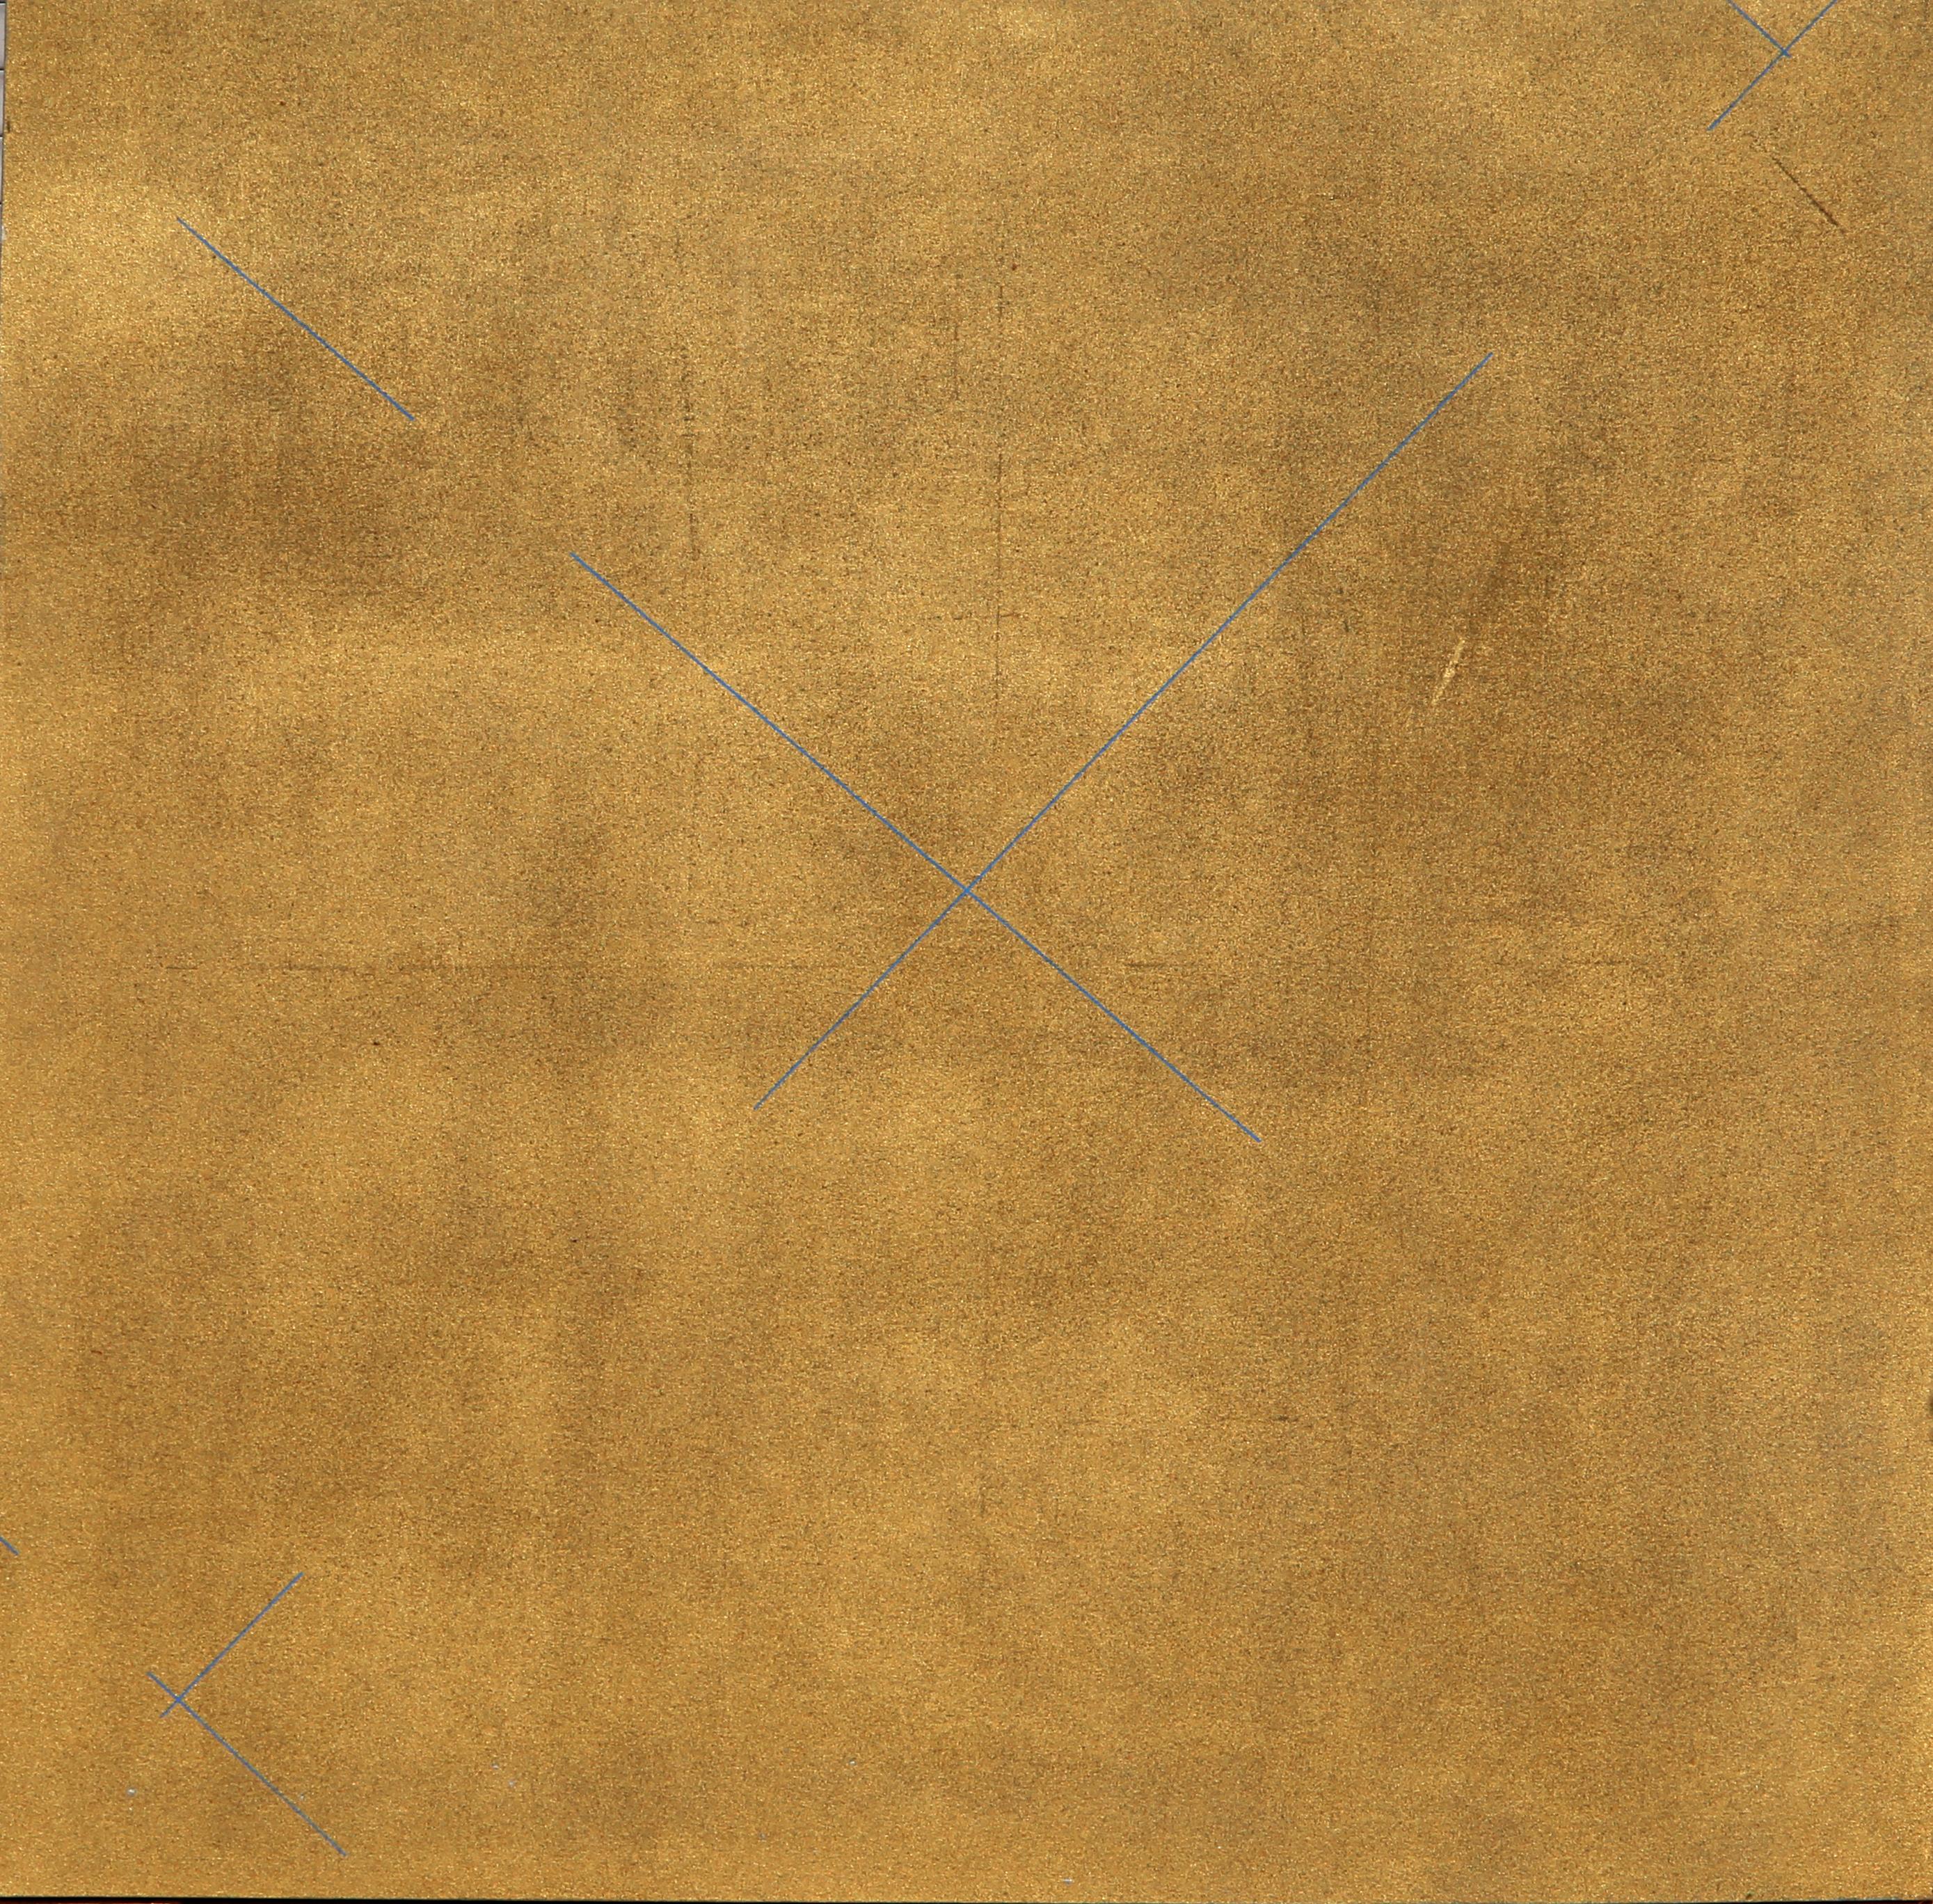 Artist: Paul von Ringelheim, Austrian/American (1933 - 2003)
Title: Untitled - Gold Minimalist
Year: 1975
Medium: Oil on Canvas, signed and dated verso
Size: 66.5 x 66.5 in. (168.91 x 168.91 cm)